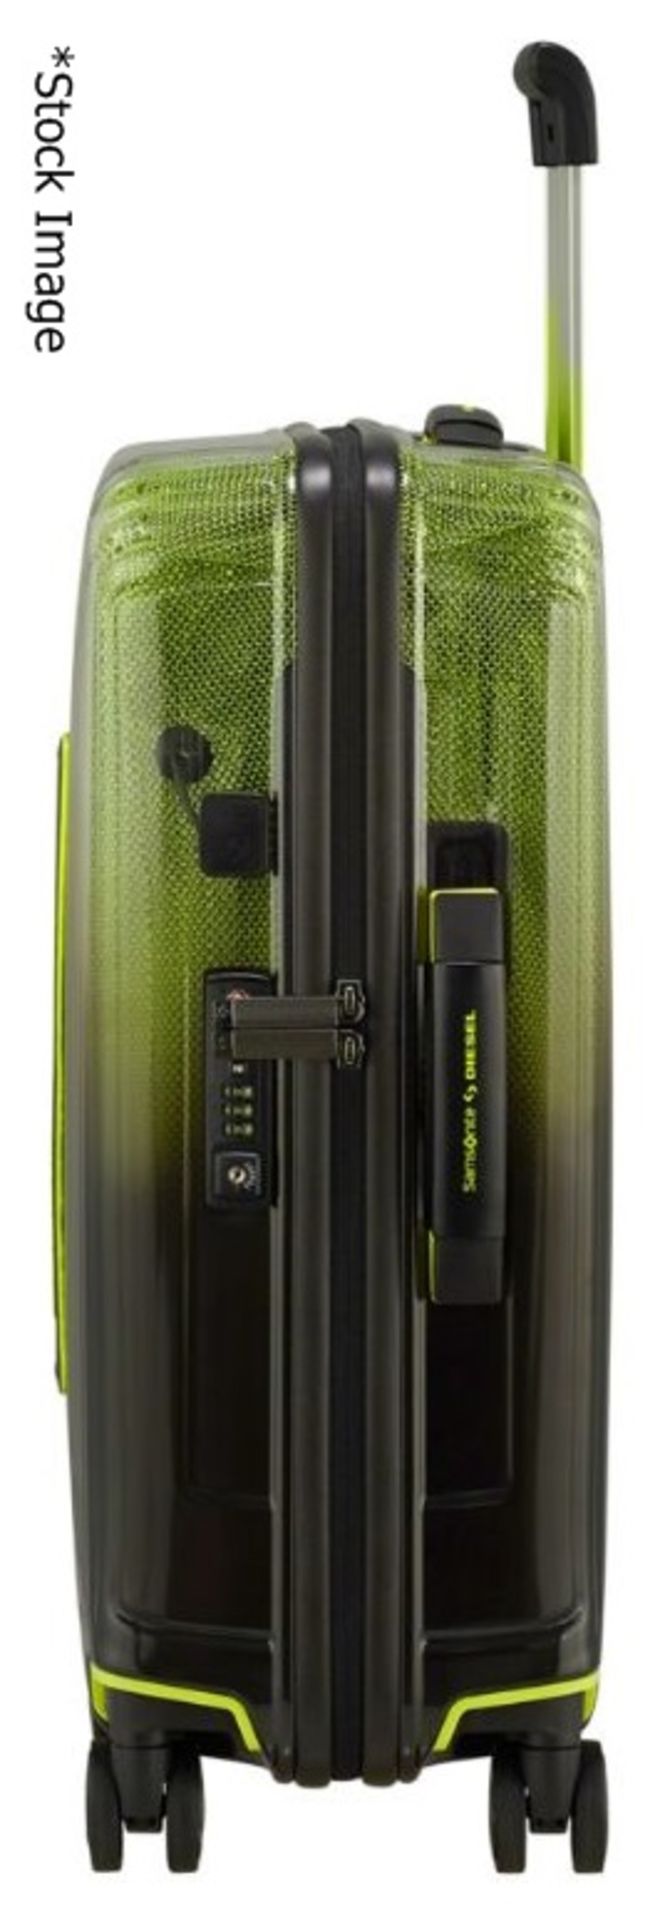 1 x SAMSONITE / DIESEL 'Neopulse' Polycarbonate Spinner Suitcase (55cm) - Ex-Display With Tags - - Image 5 of 17